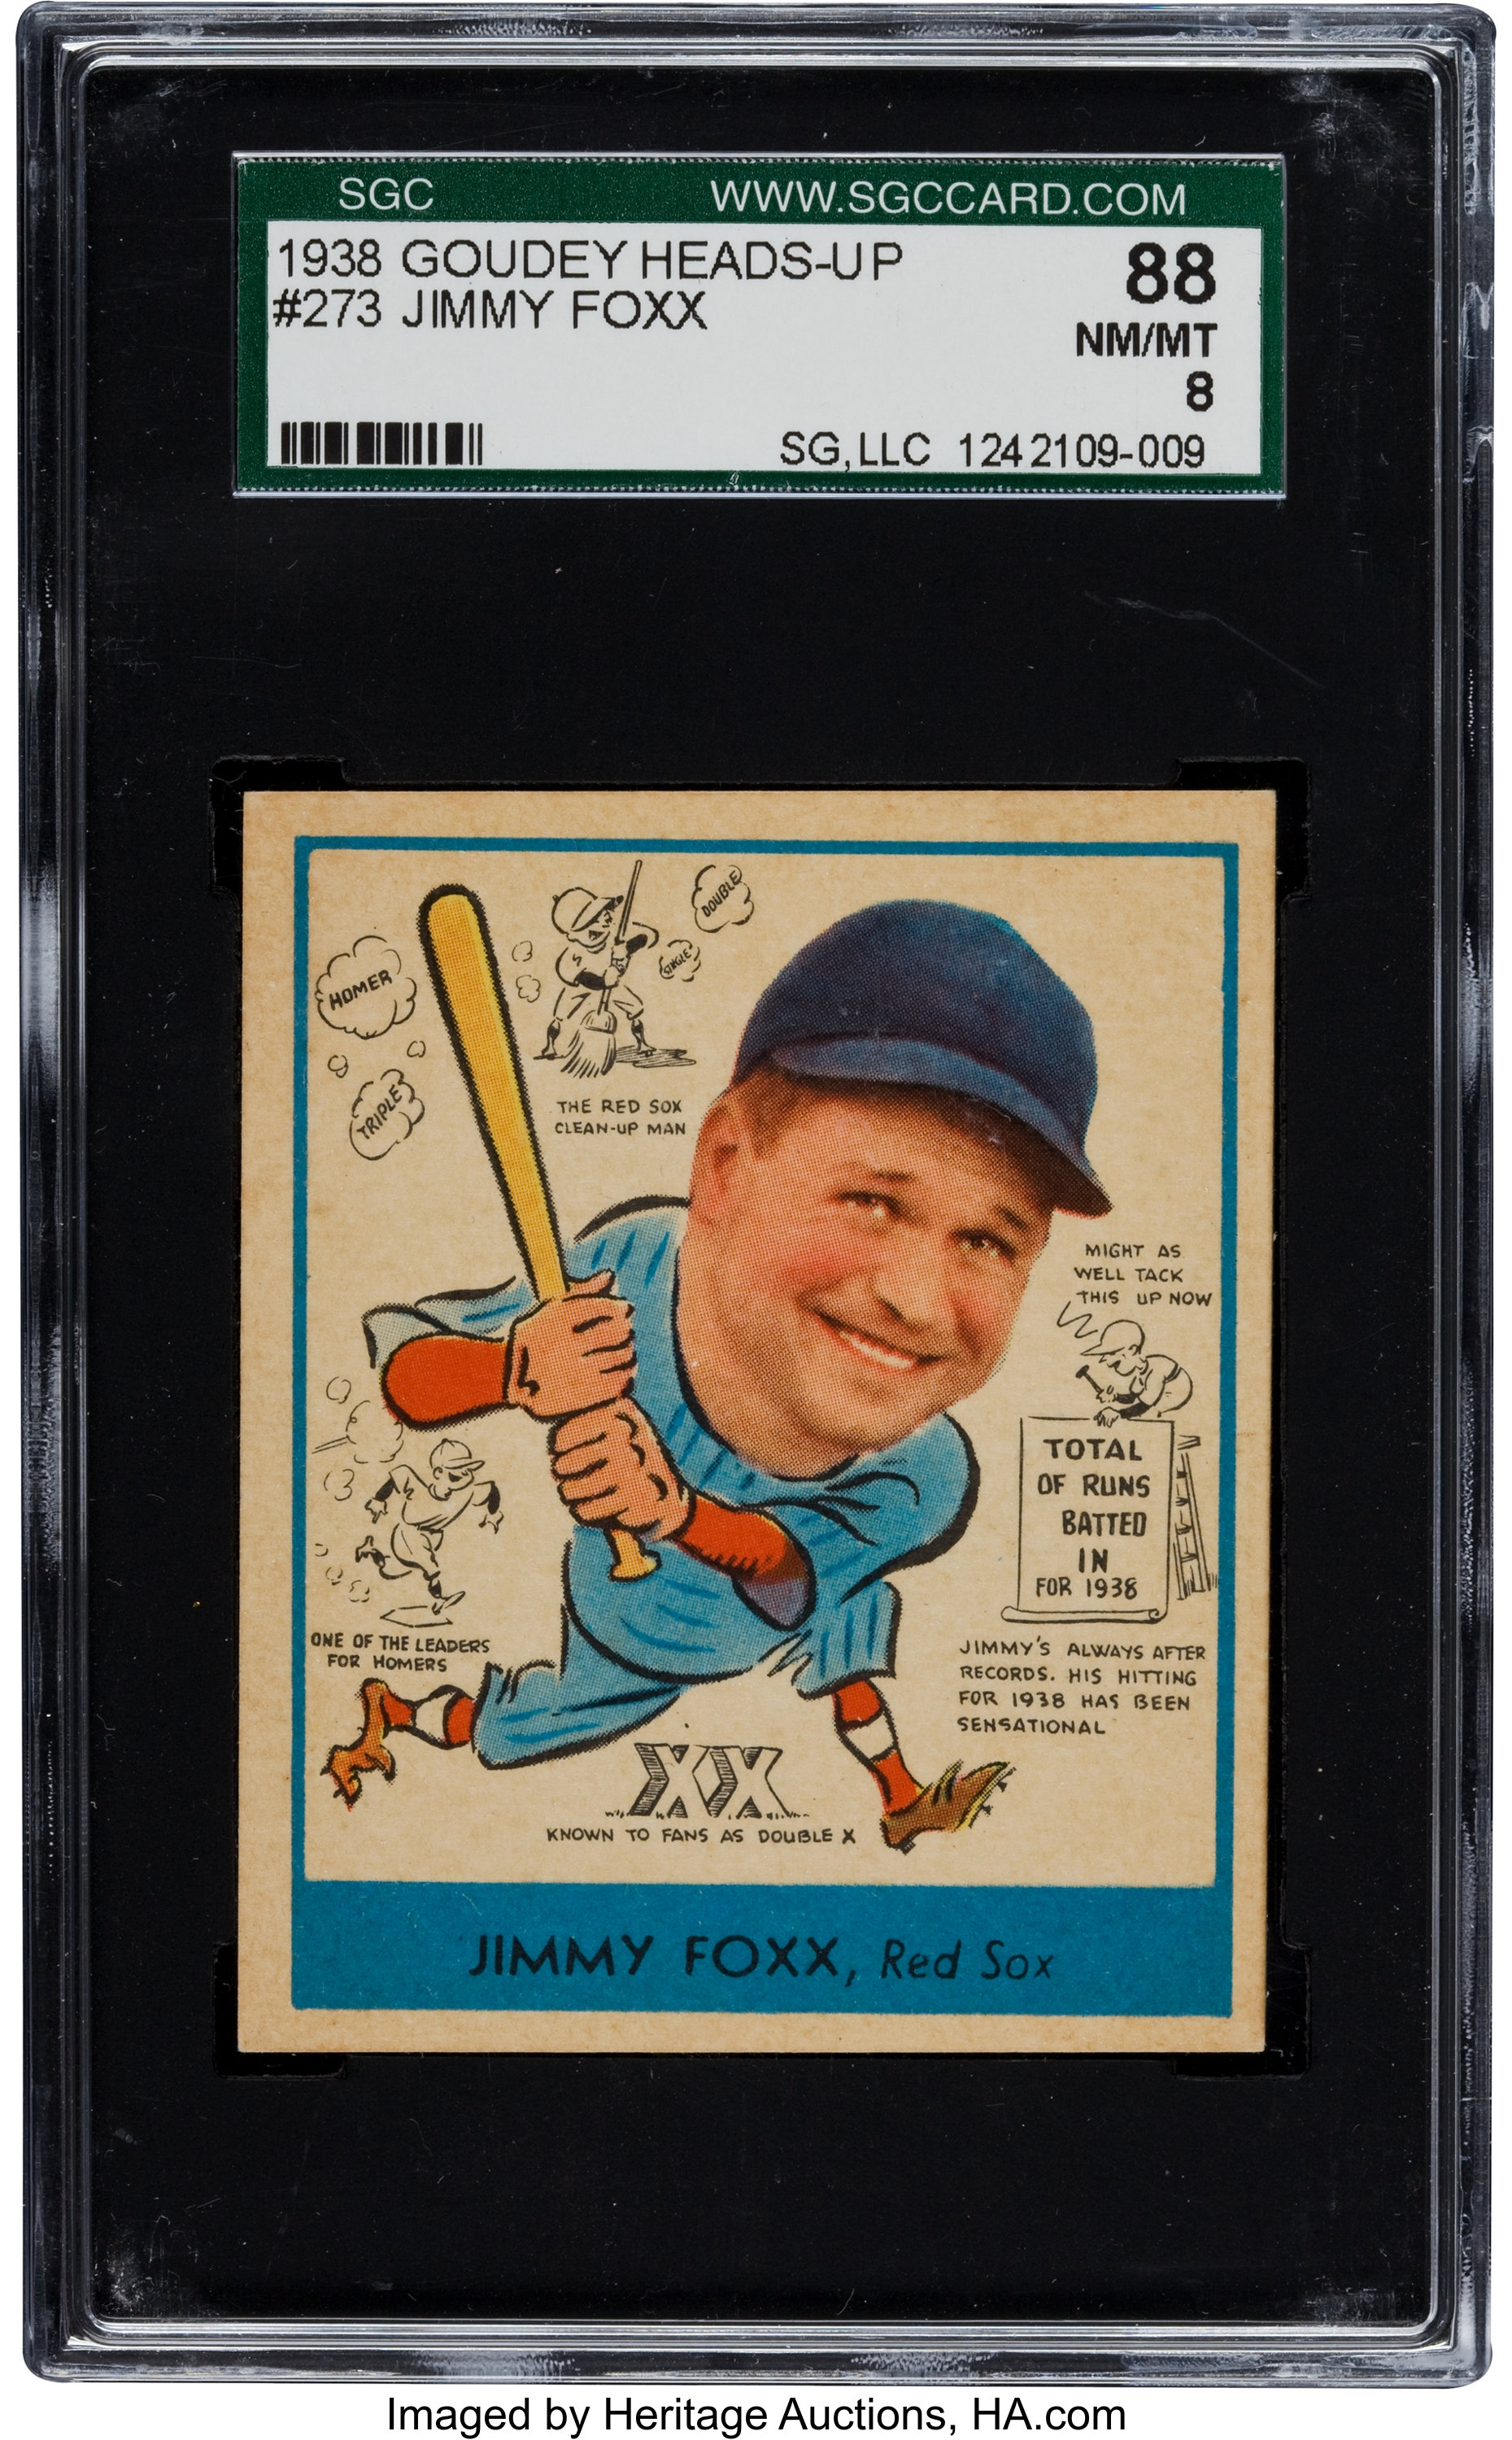 1933 Goudey Jimmy Jimmie Foxx Baseball Card, Graded PSA 2.5, Centered